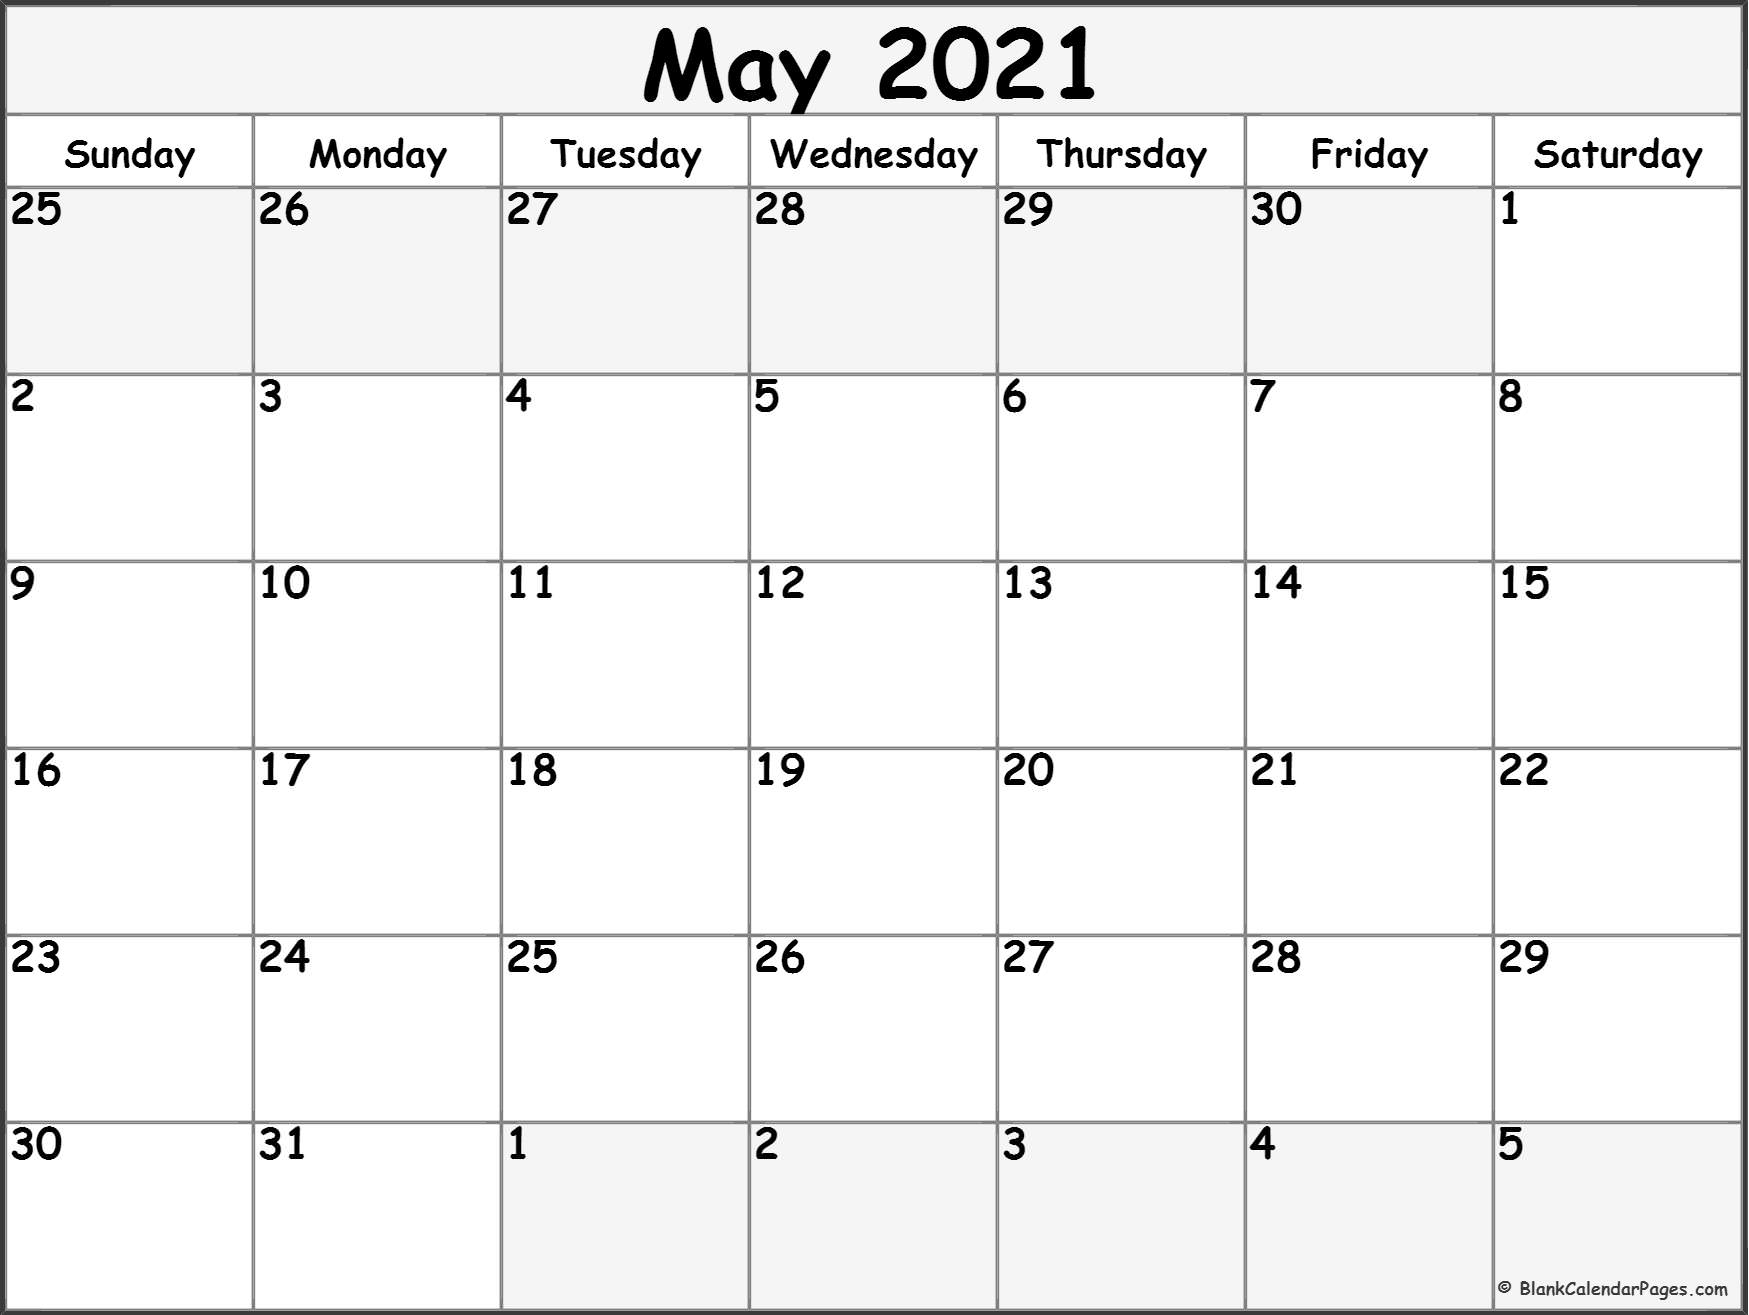 May 2021 Blank Calendar Templates.